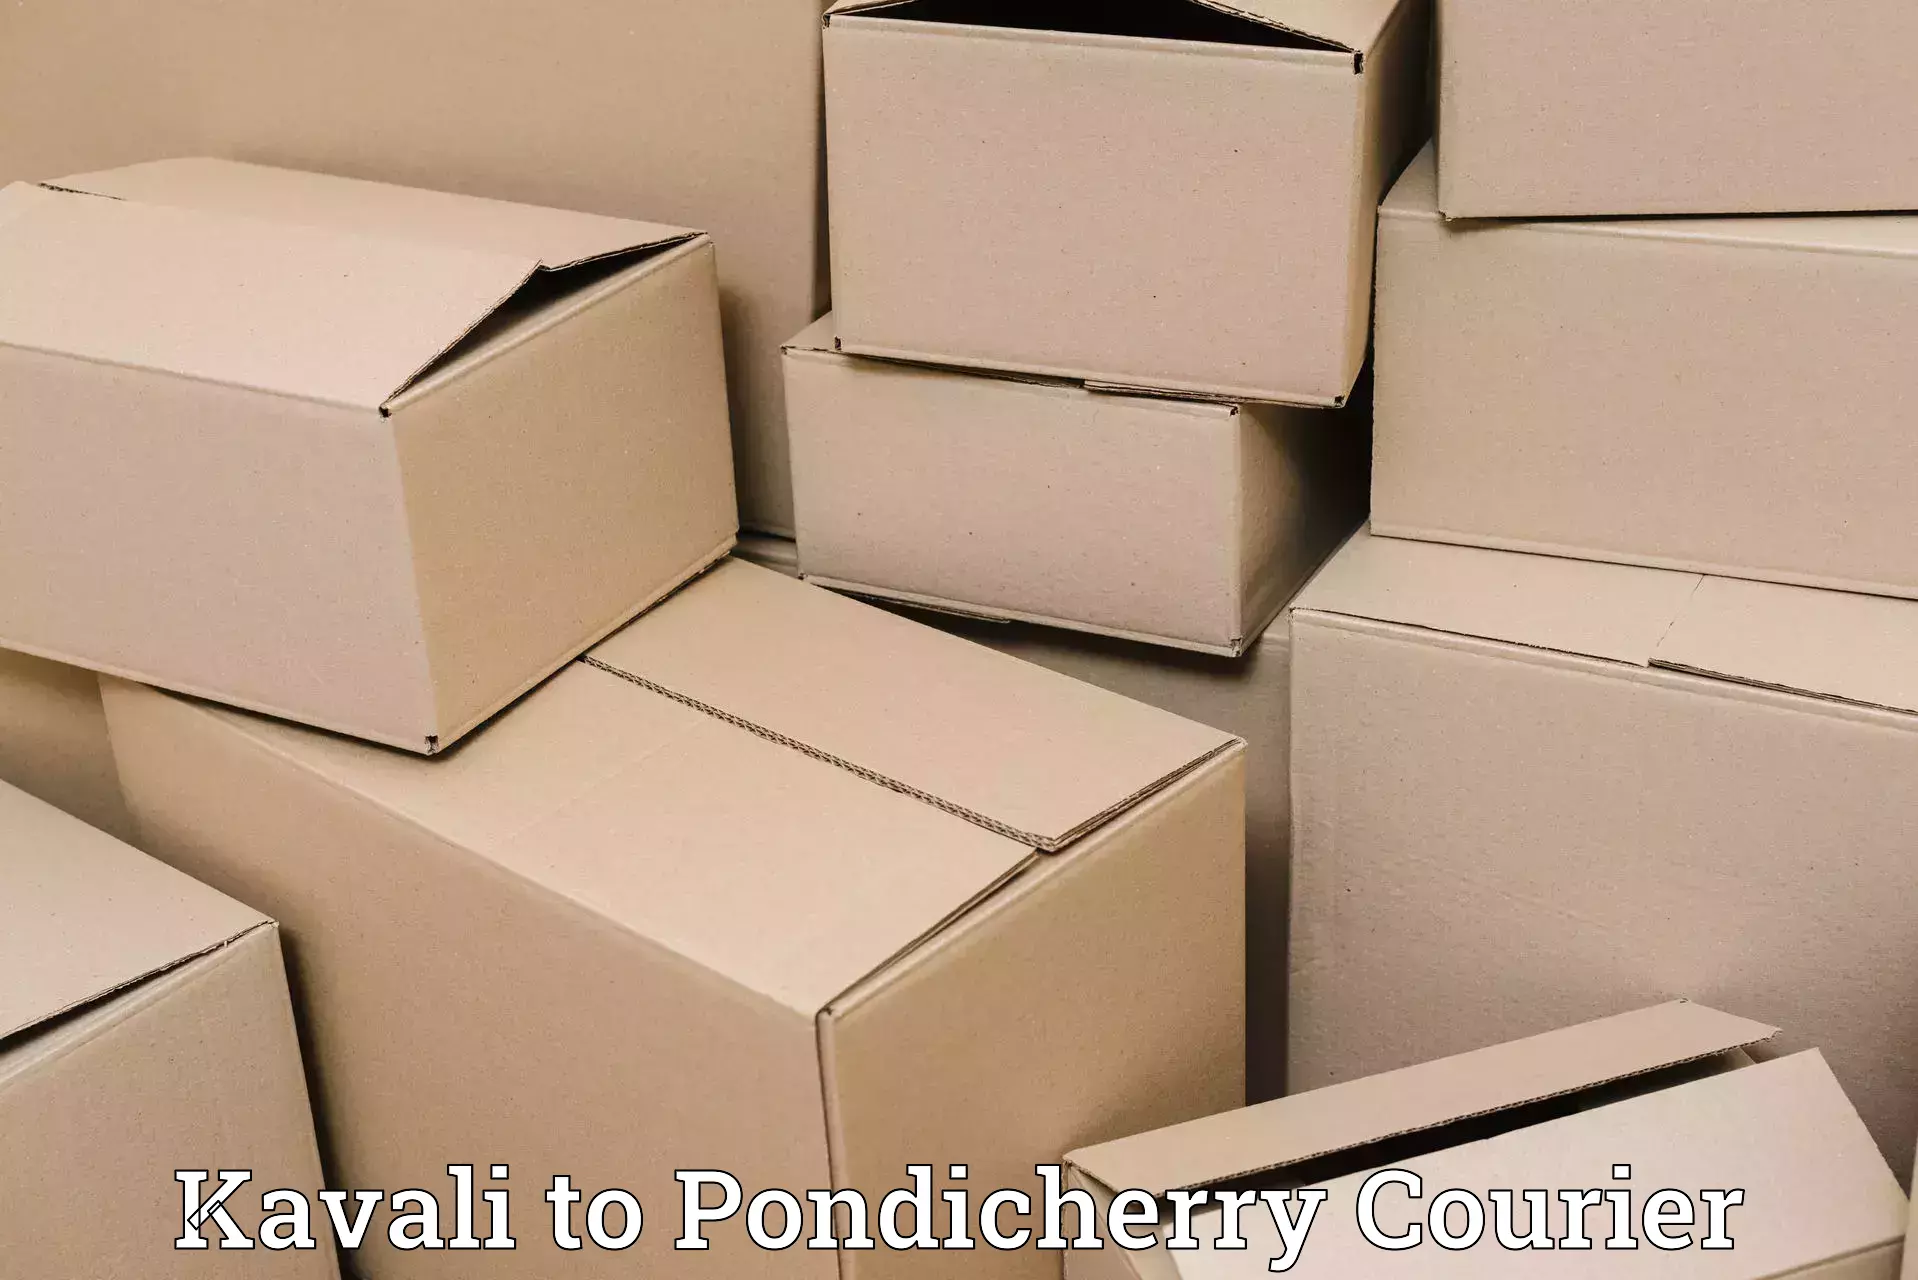 Logistics service provider Kavali to Pondicherry